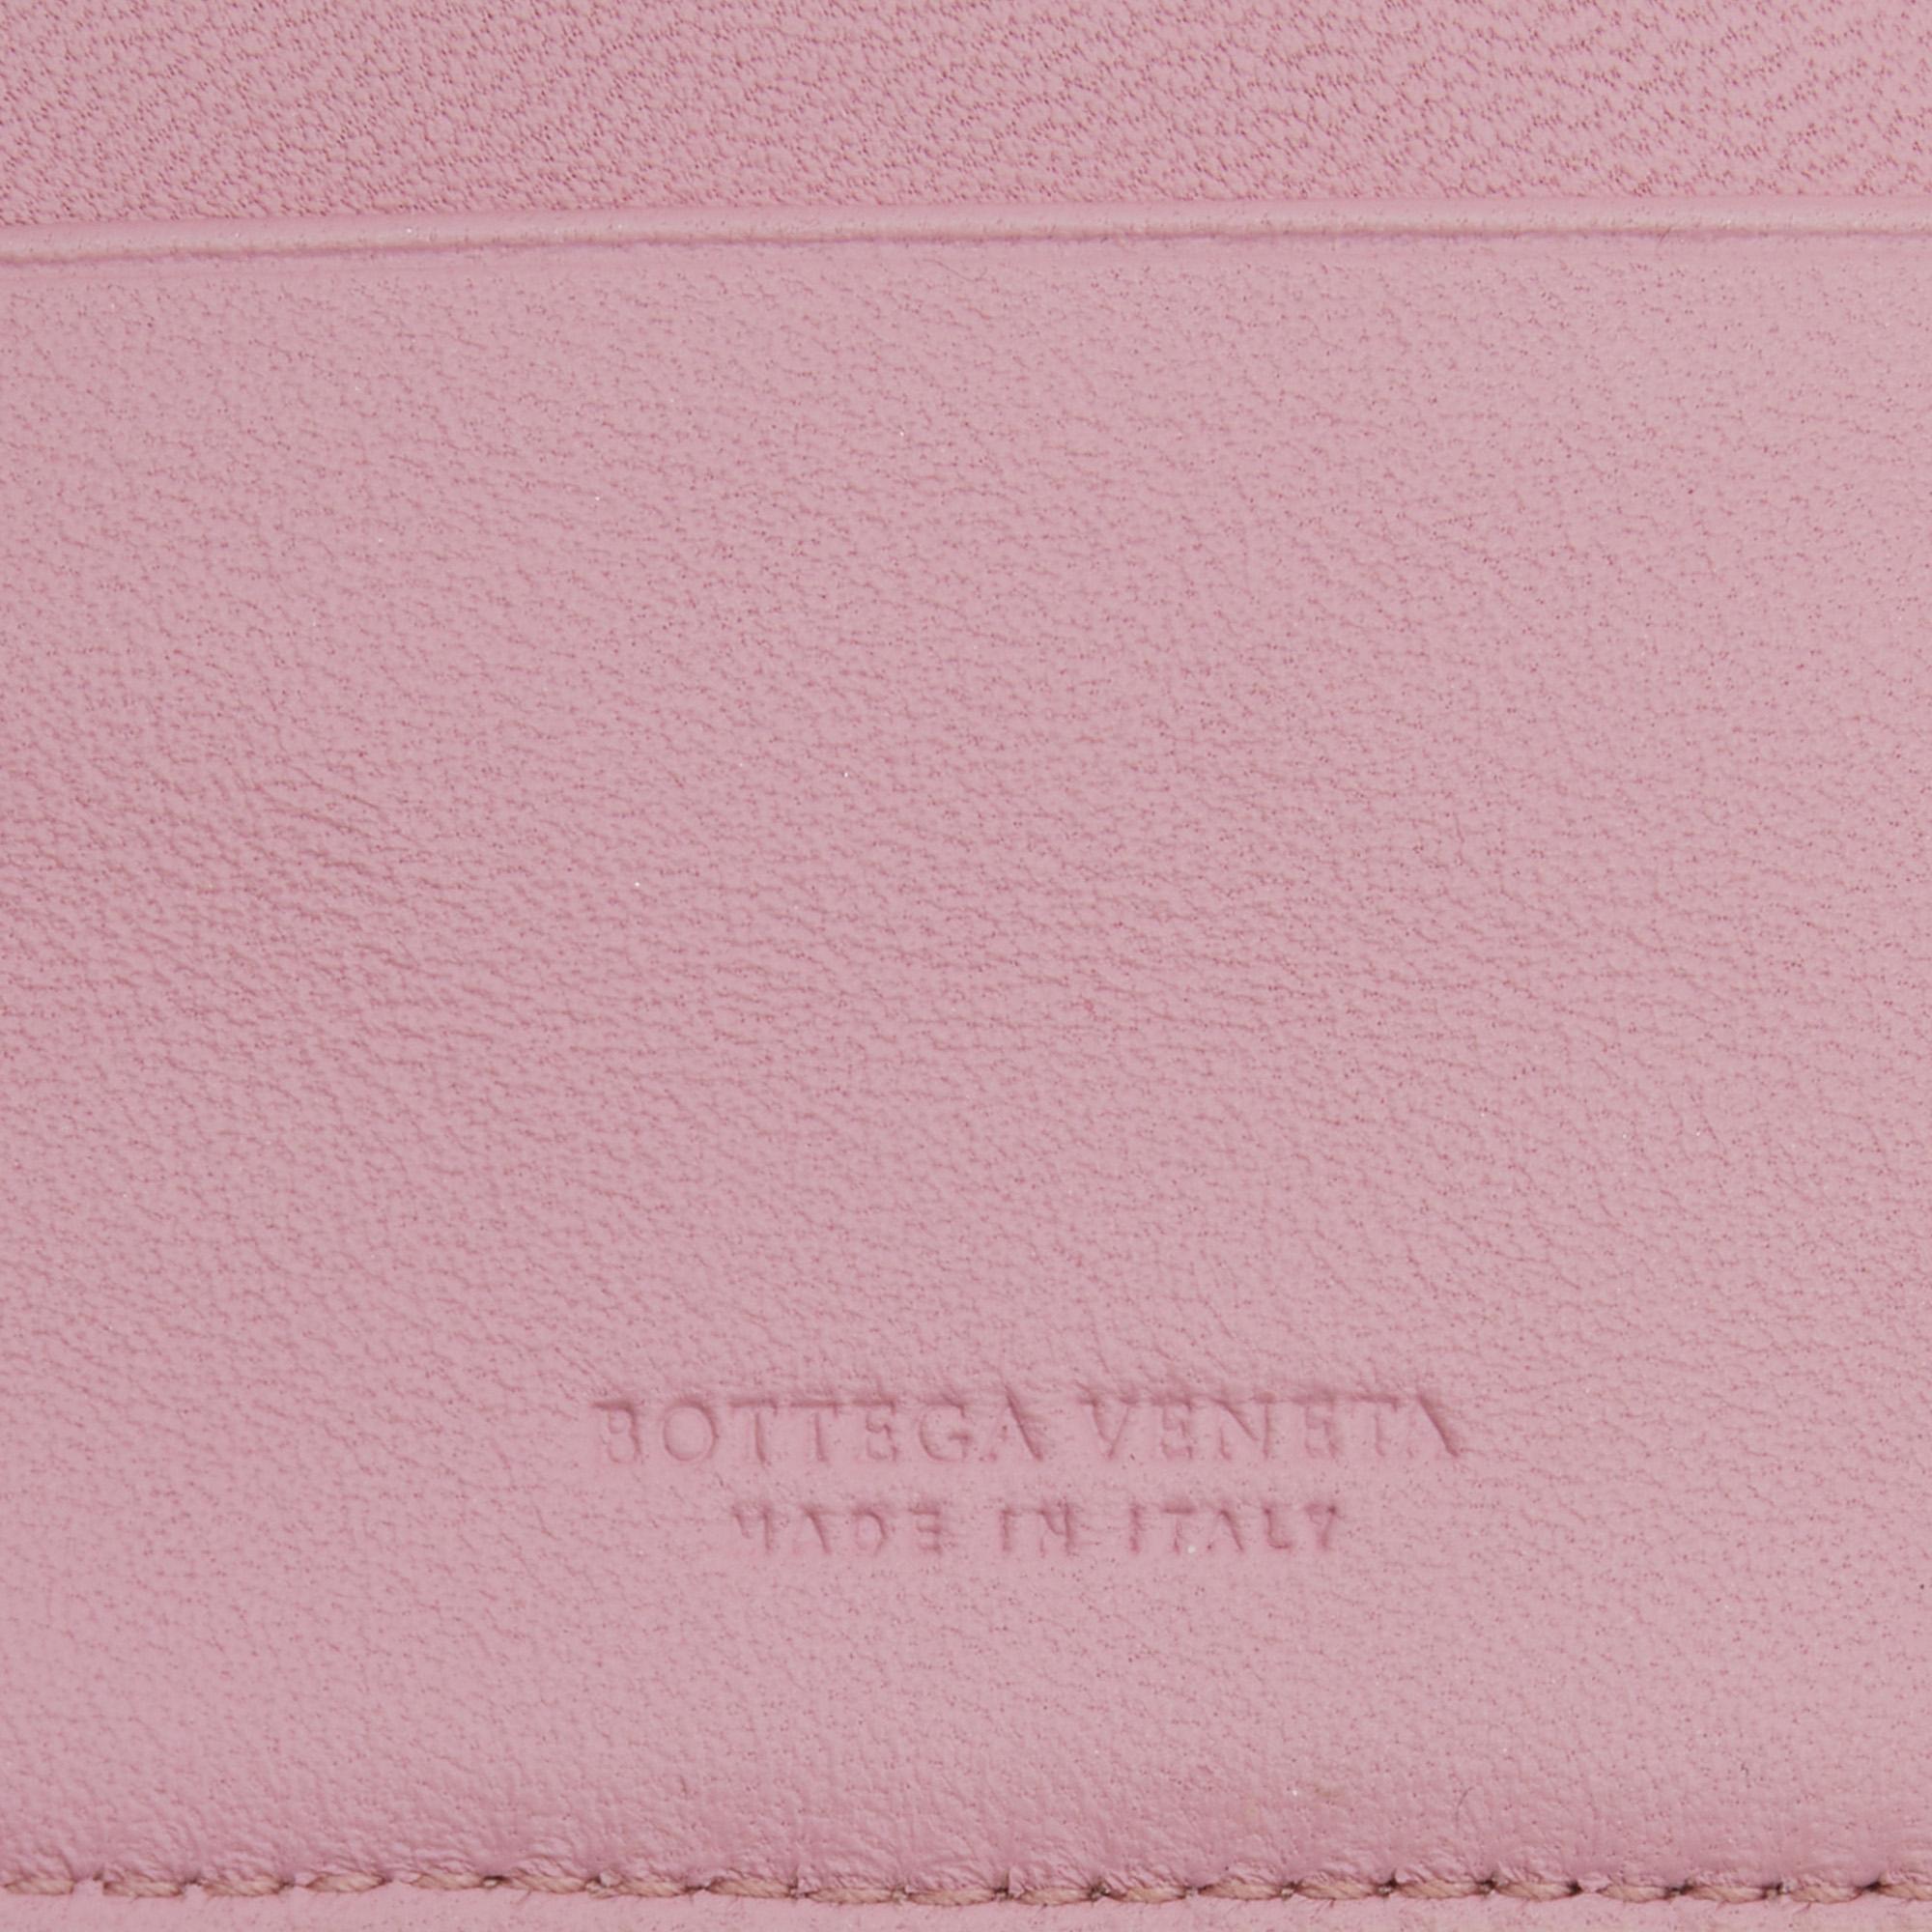 Bottega Veneta Pink Intrecciato Leather Compact Wallet 2